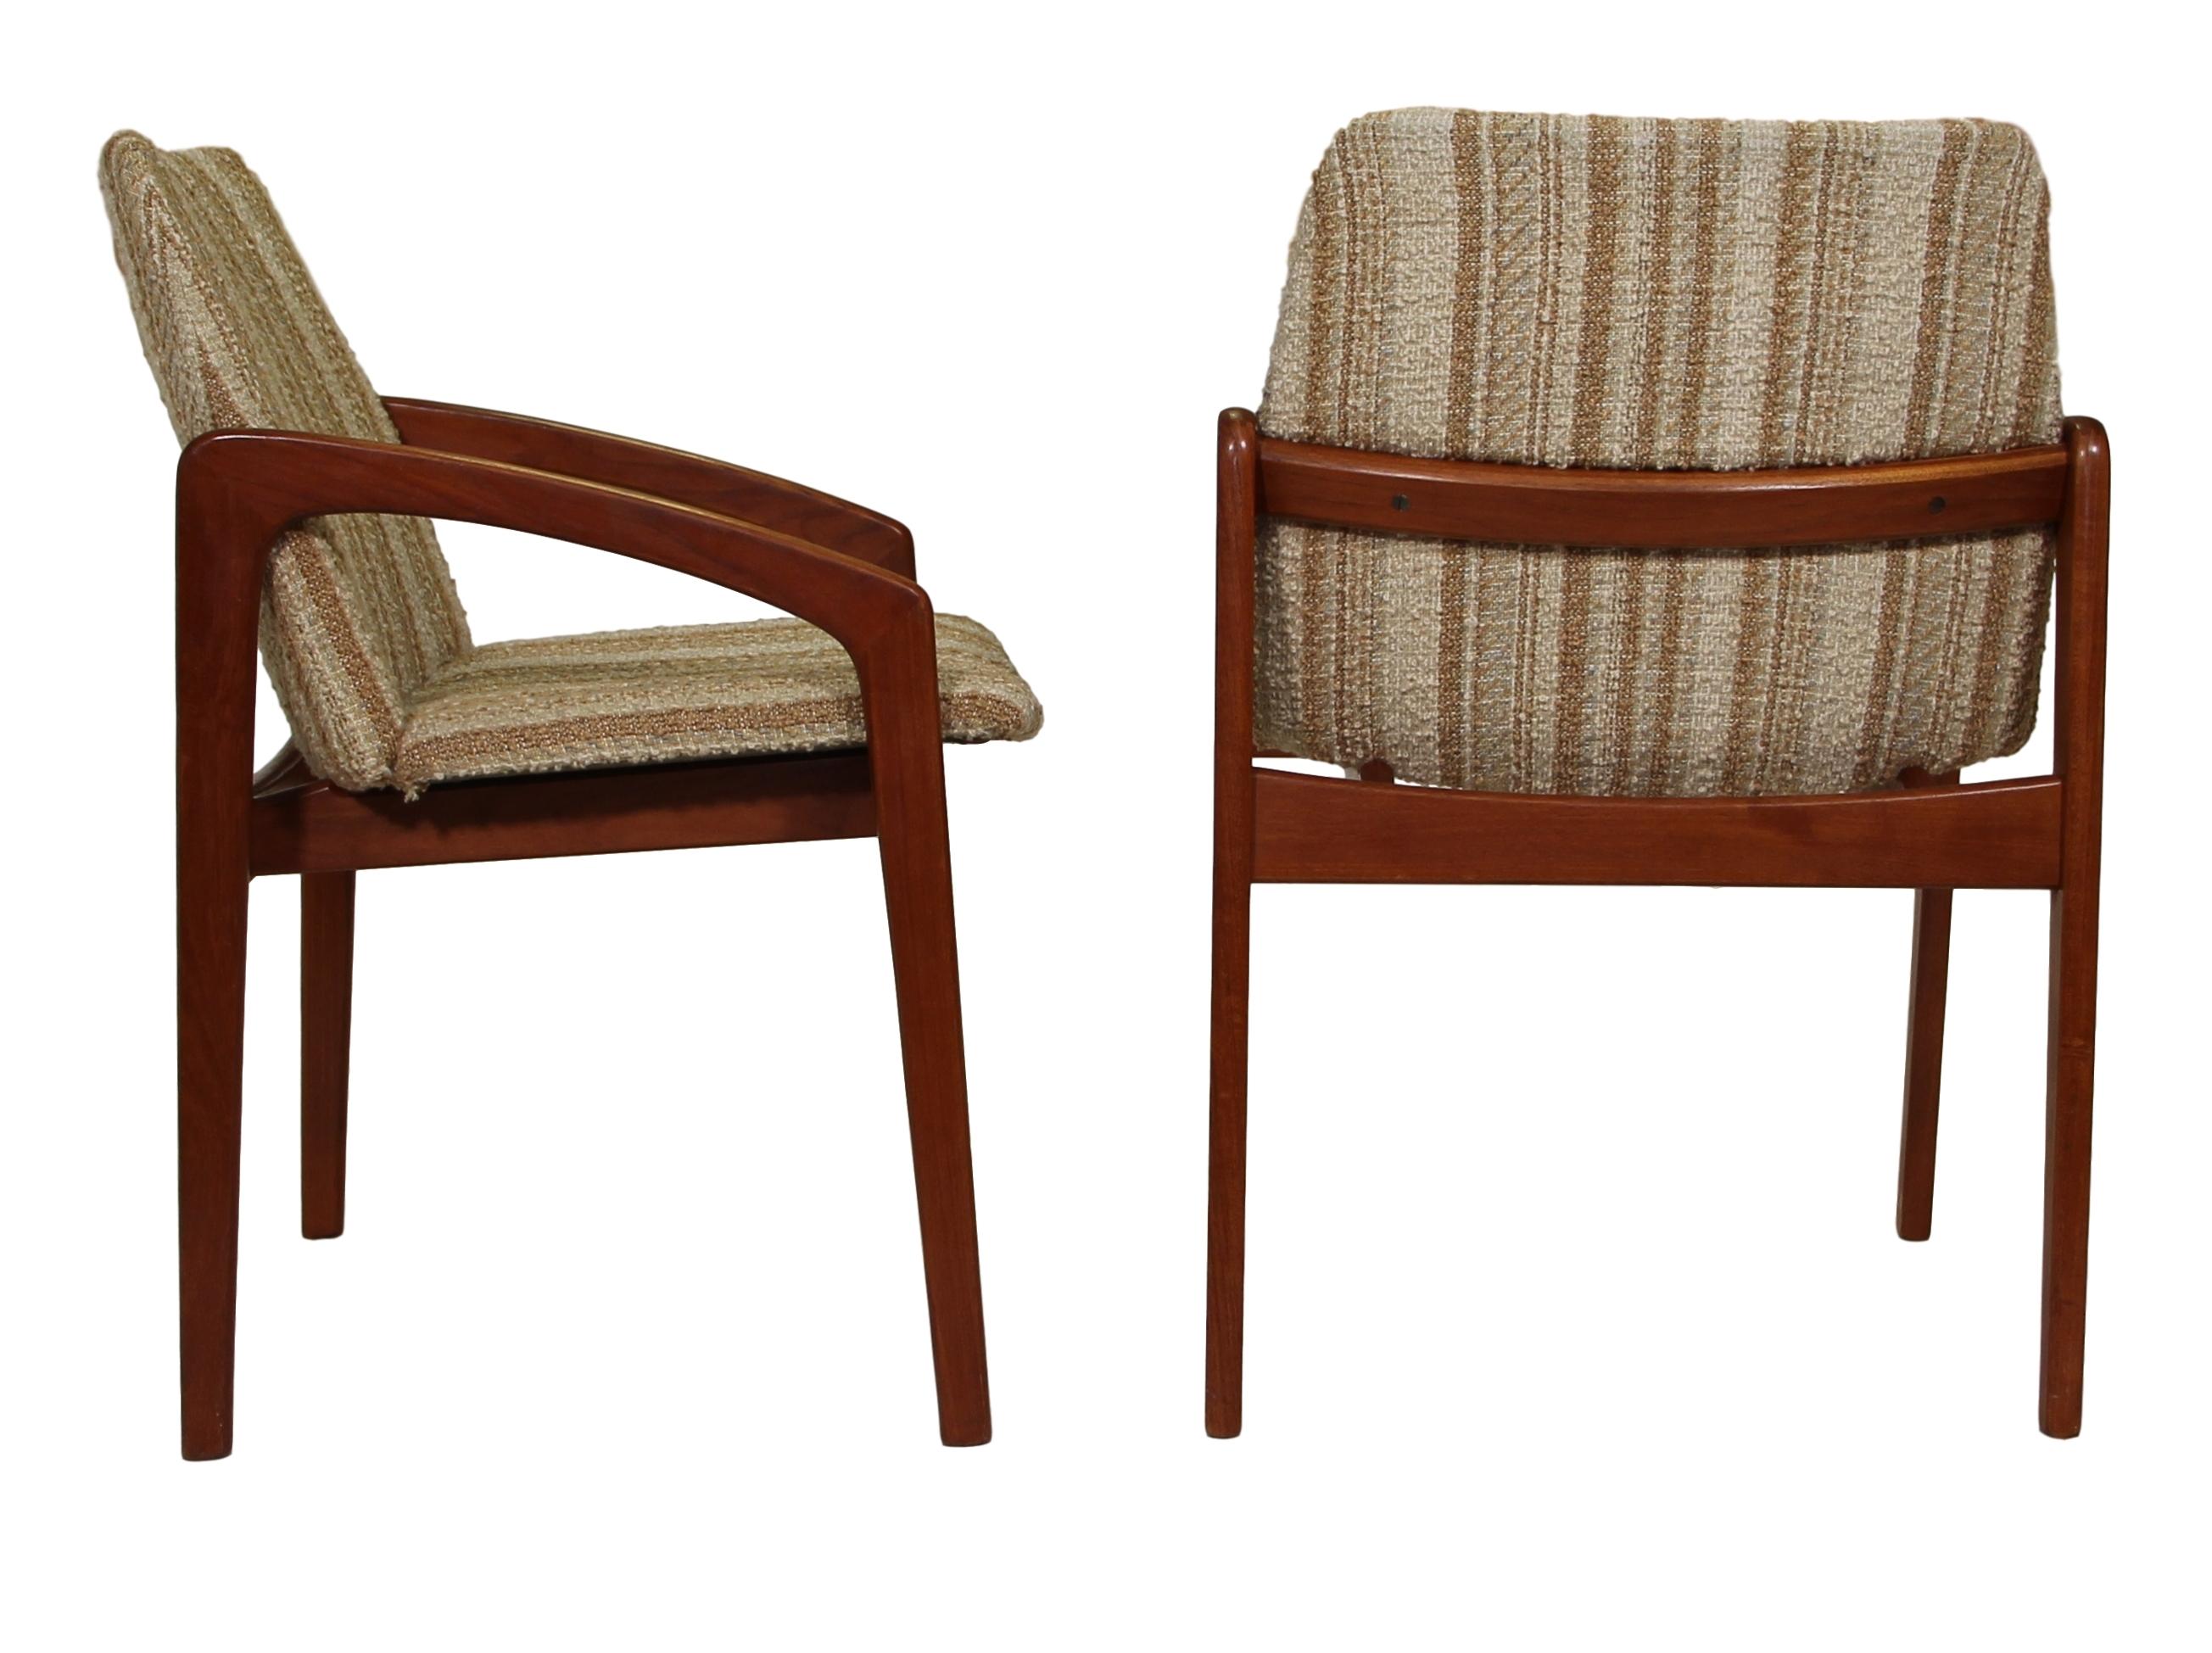 20th Century Set of 2 Danish Modern Chairs by Kai Kristiansen